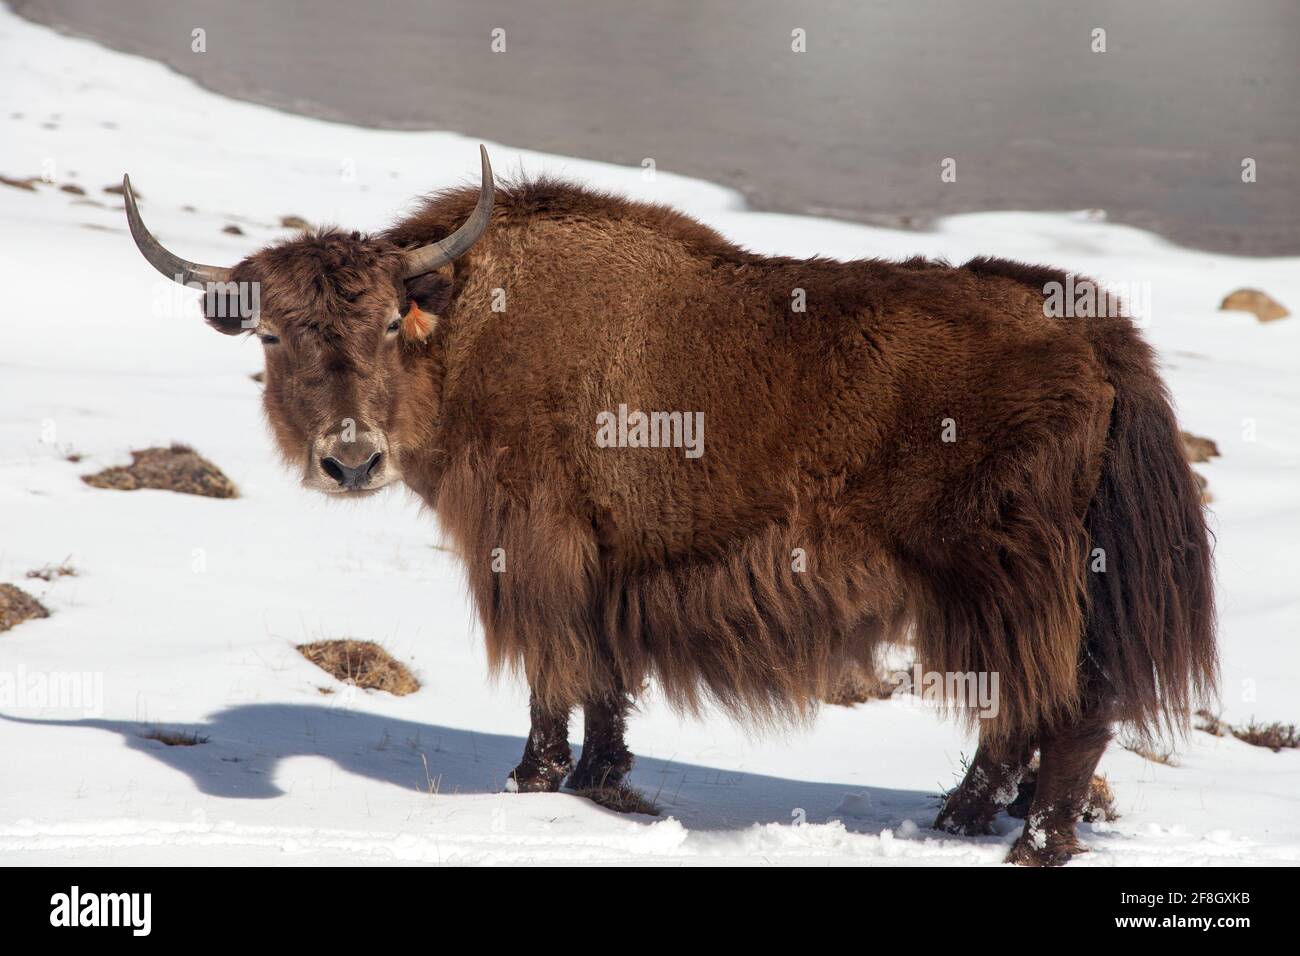 Brown yak on snow background Stock Photo